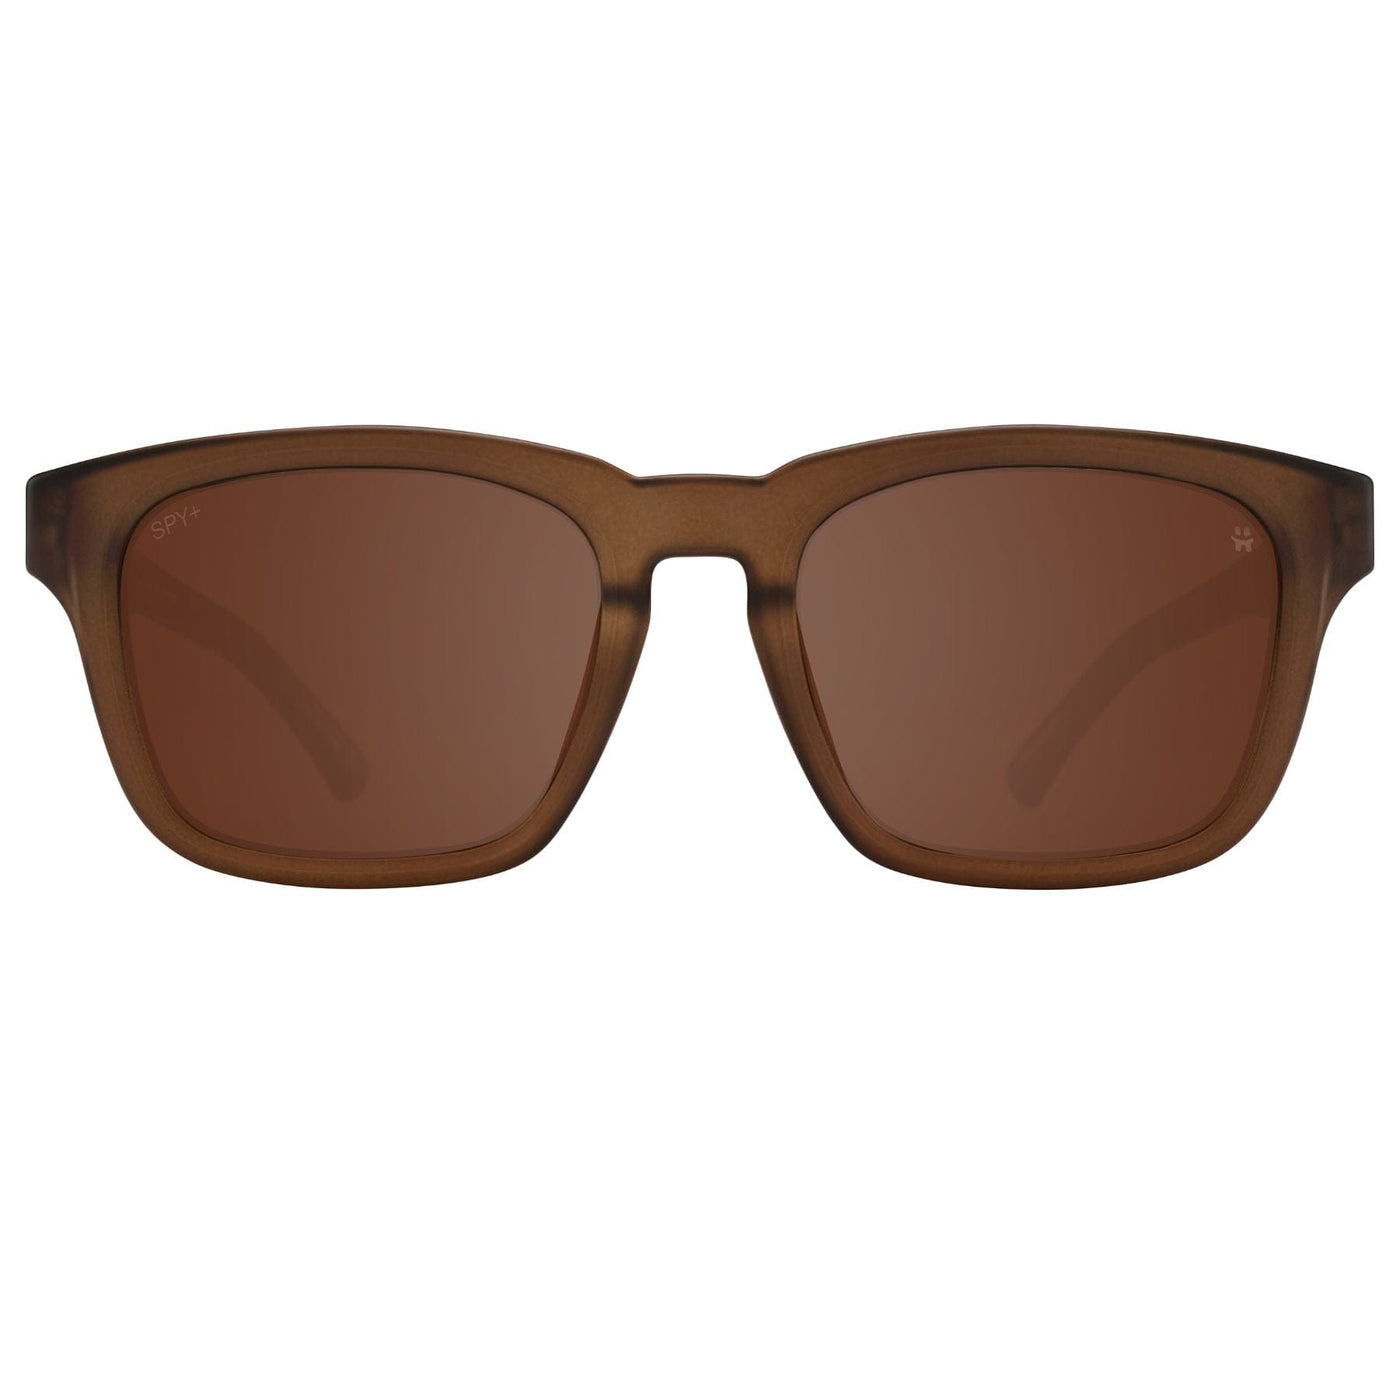 SPY SAXONY Polarized Sunglasses, Happy Lens - Bronze 8Lines Shop - Fast Shipping